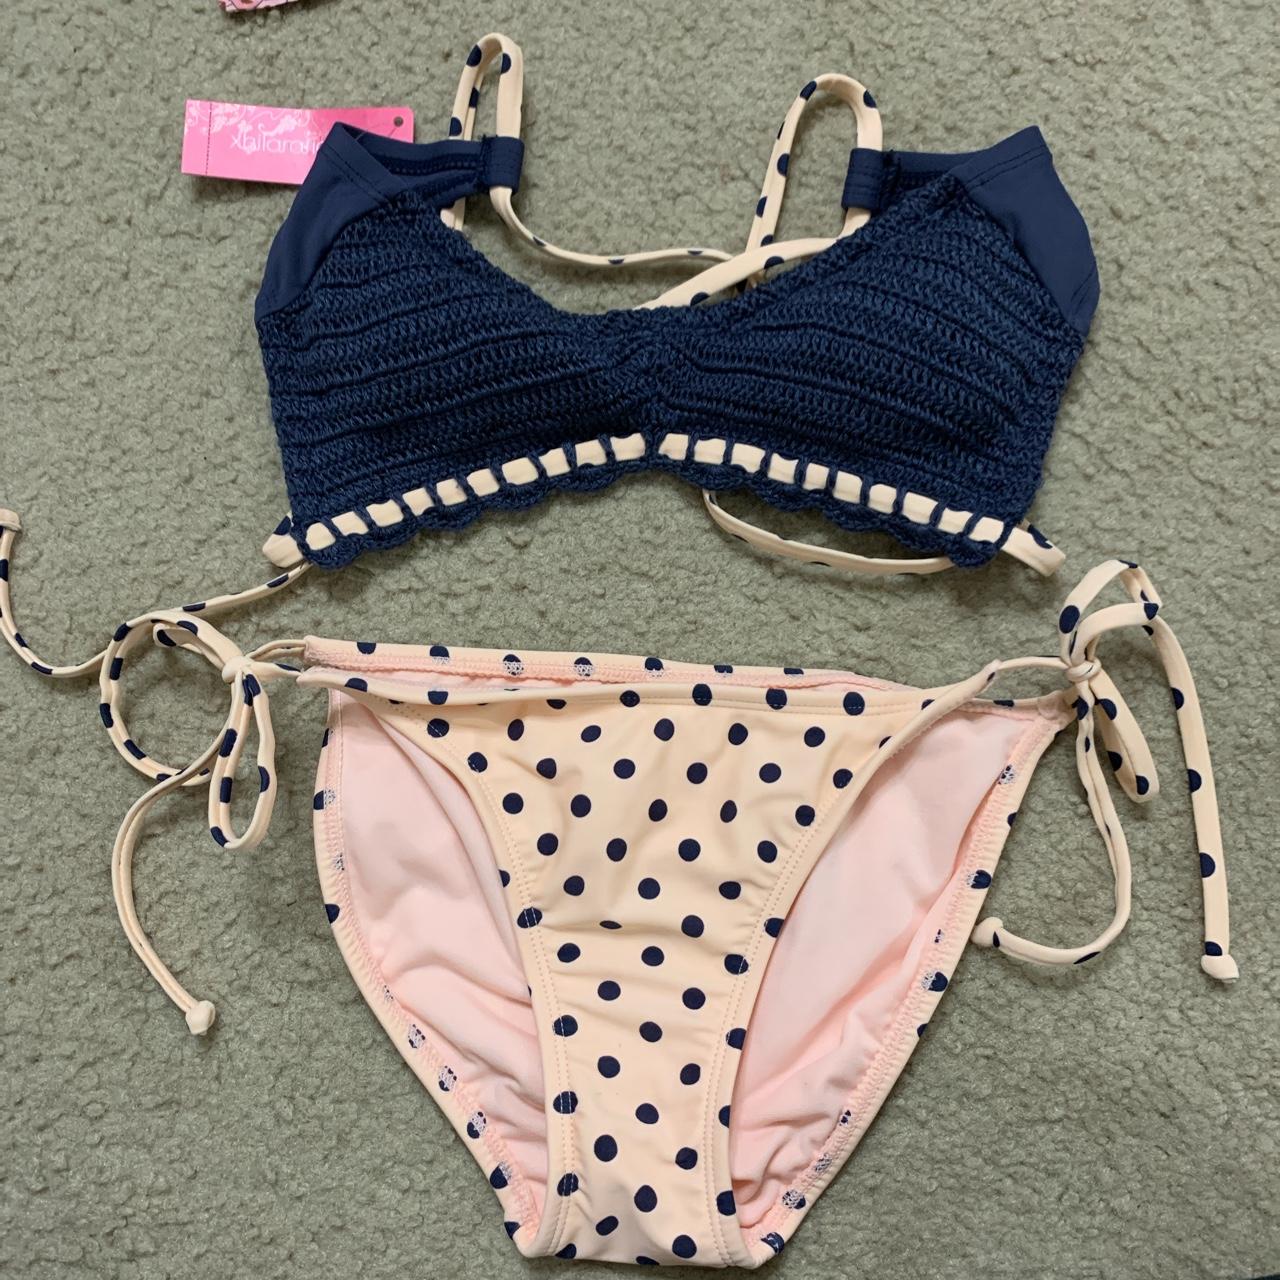 Acacia Swimwear Women's Navy and Pink Bikinis-and-tankini-sets